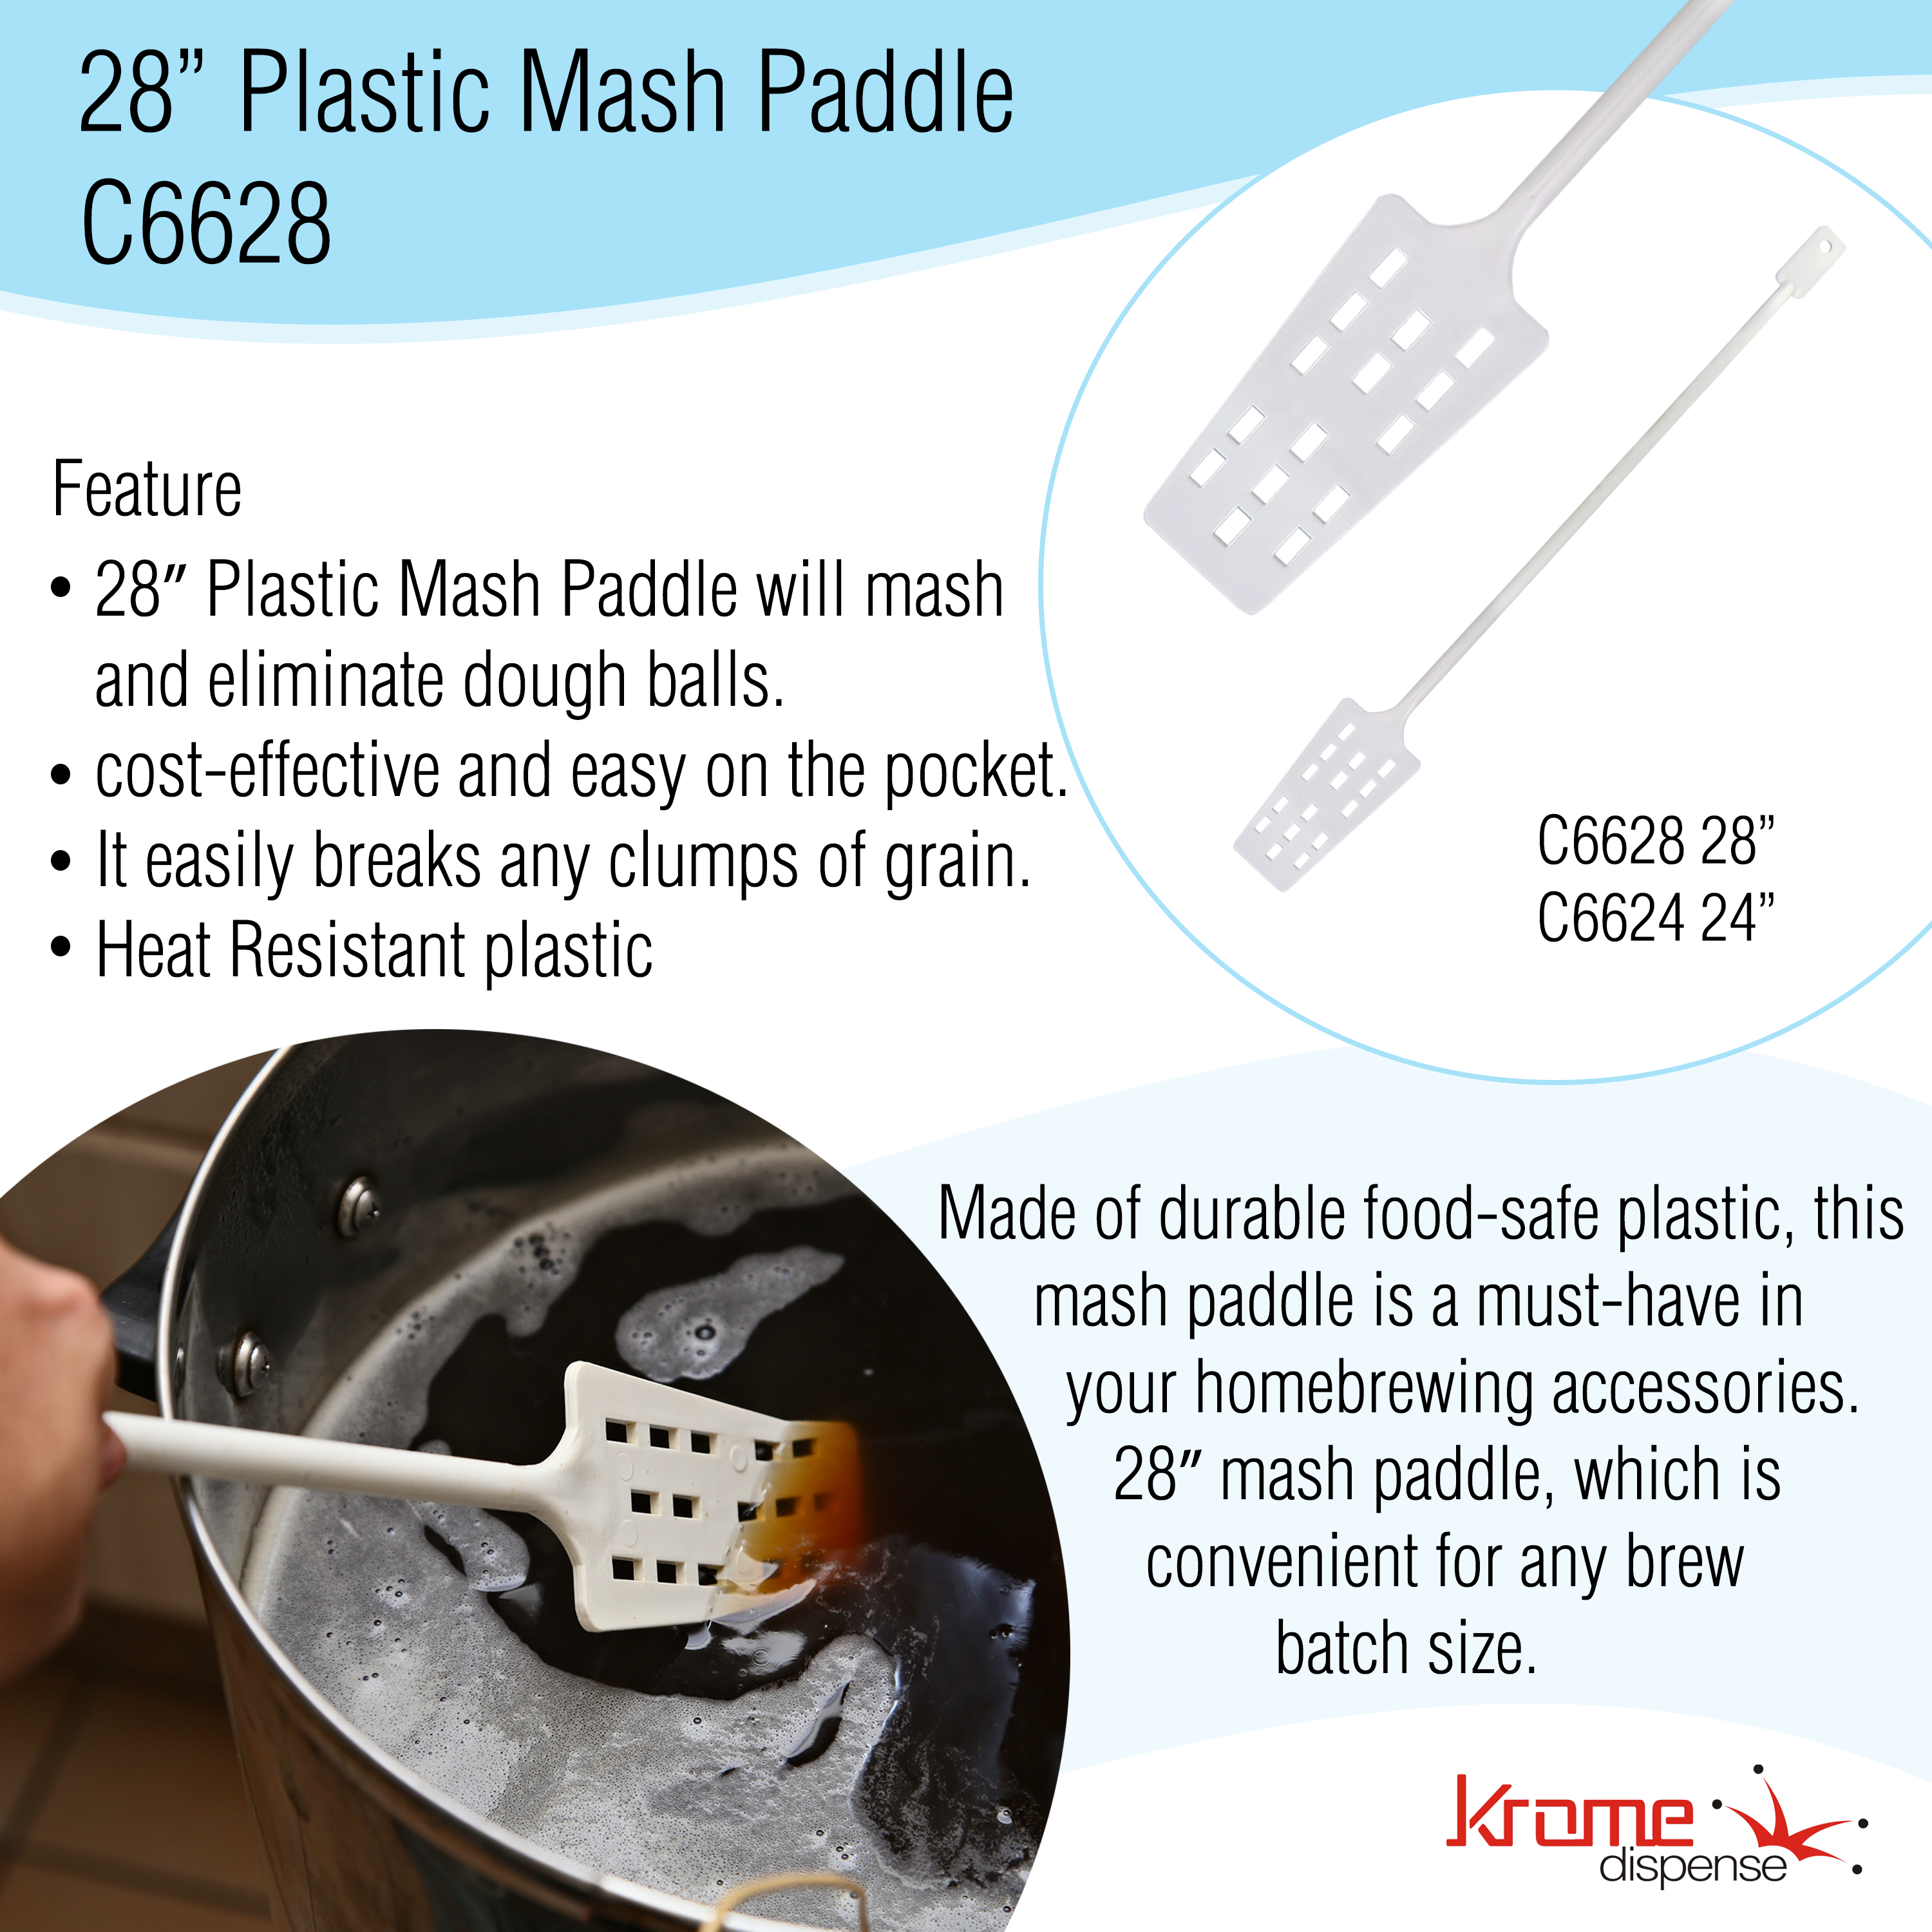 Plastic Mash Paddle